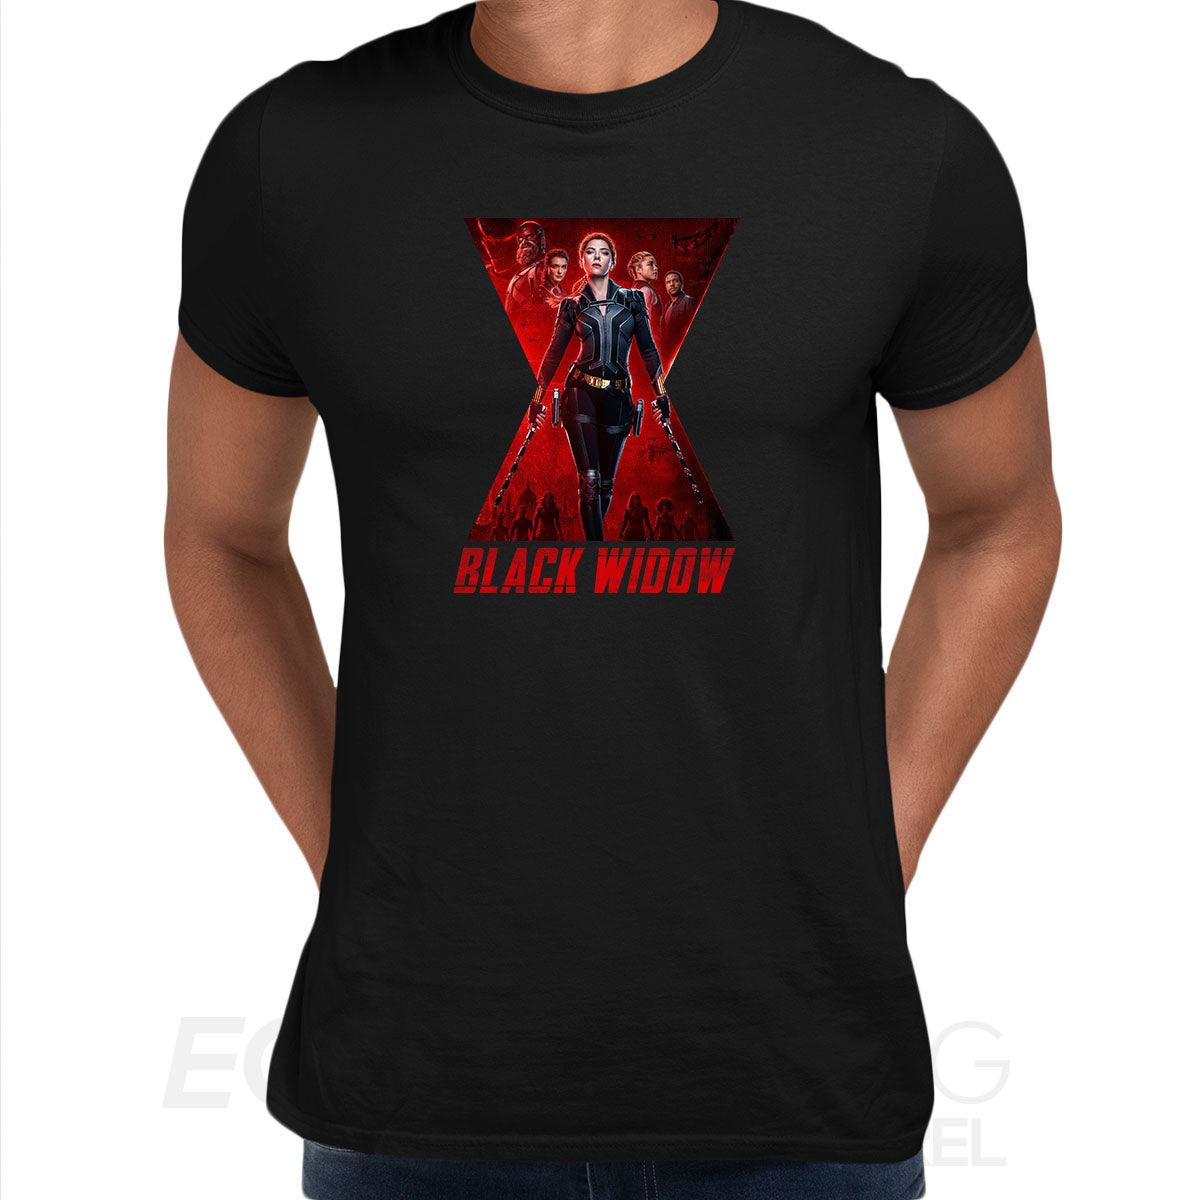 Black Widow Movie T-Shirt Action Marvel Adventure Superhero Adult Kids Gift Top Unisex Typography - Kuzi Tees